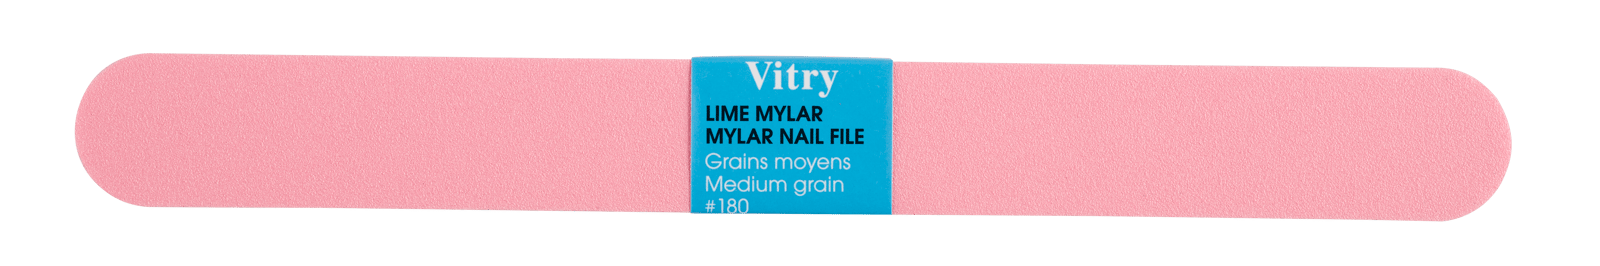 Vitry Mylar Nail File 180 Medium Pale Pink 1 st